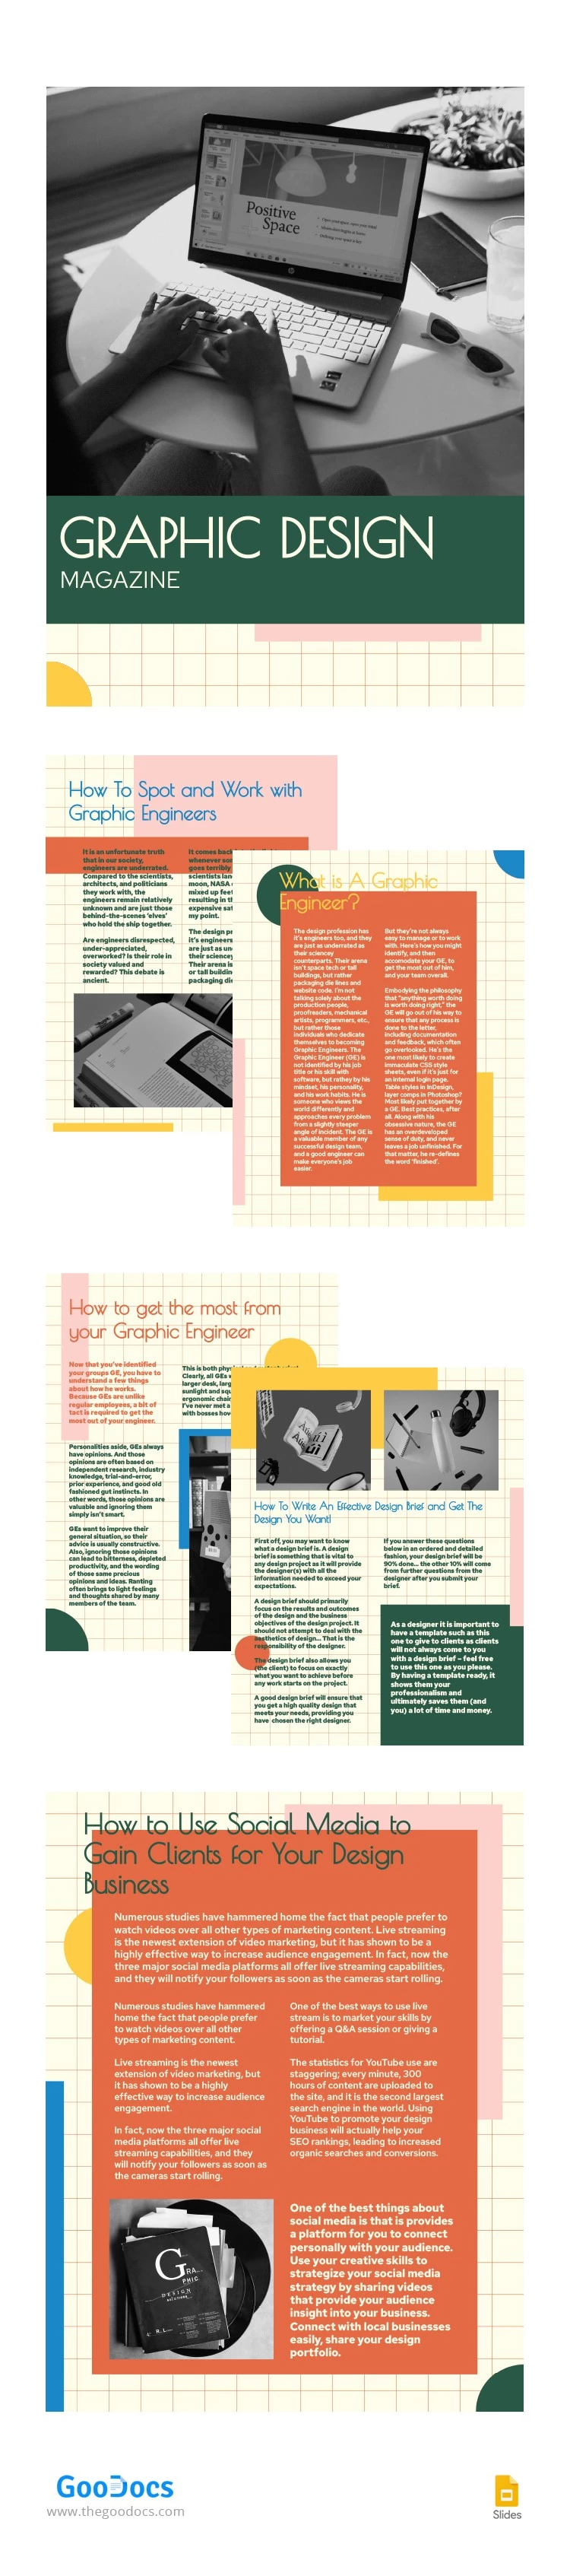 Graphic Design Magazine - free Google Docs Template - 10064206